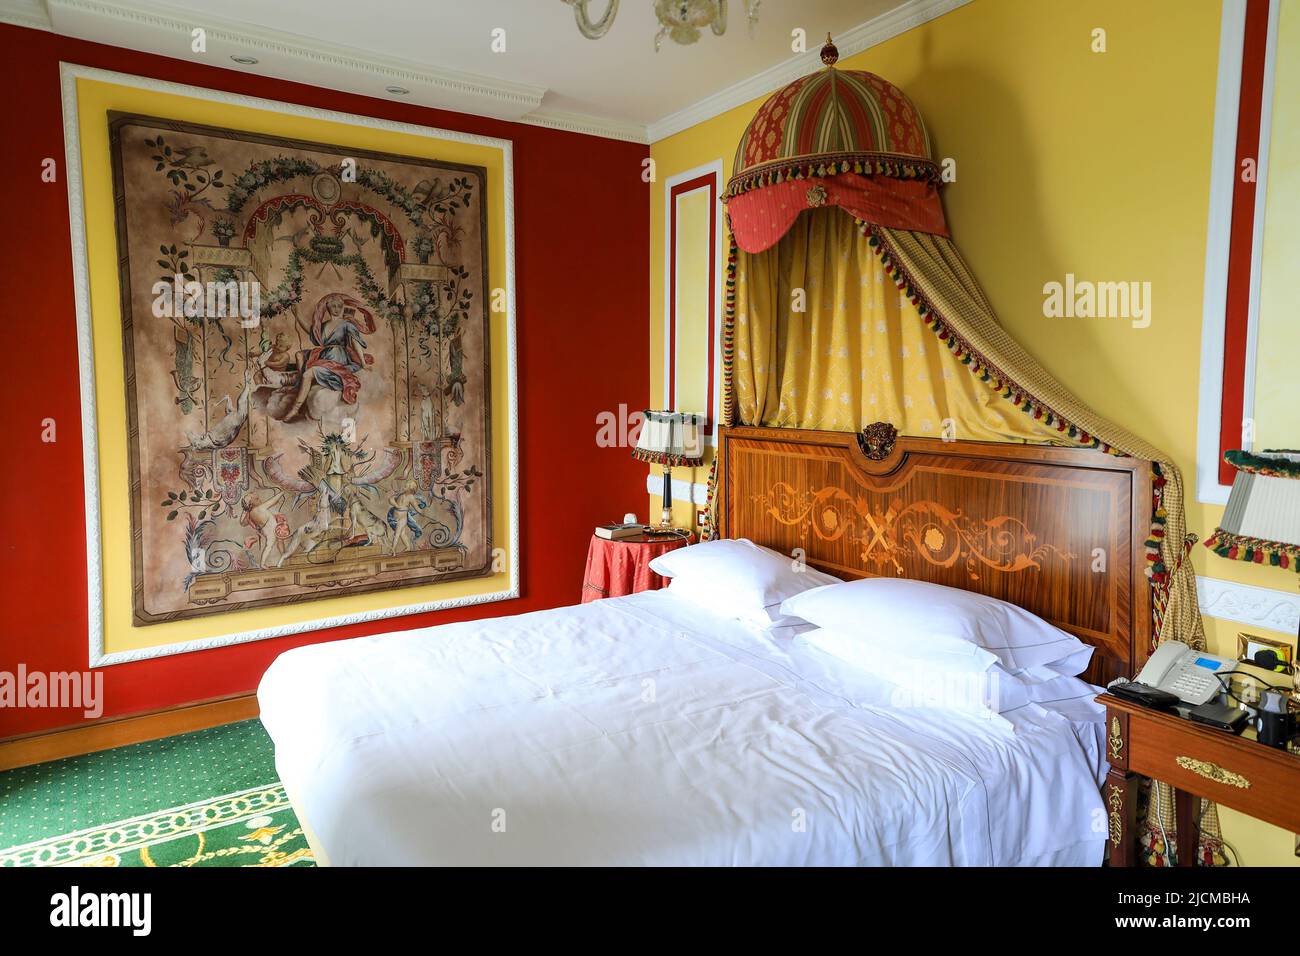 An ornate bedroon inside the Grand Hotel des Iles Borromees, Stresa, Lake Maggiore, Italy Stock Photo